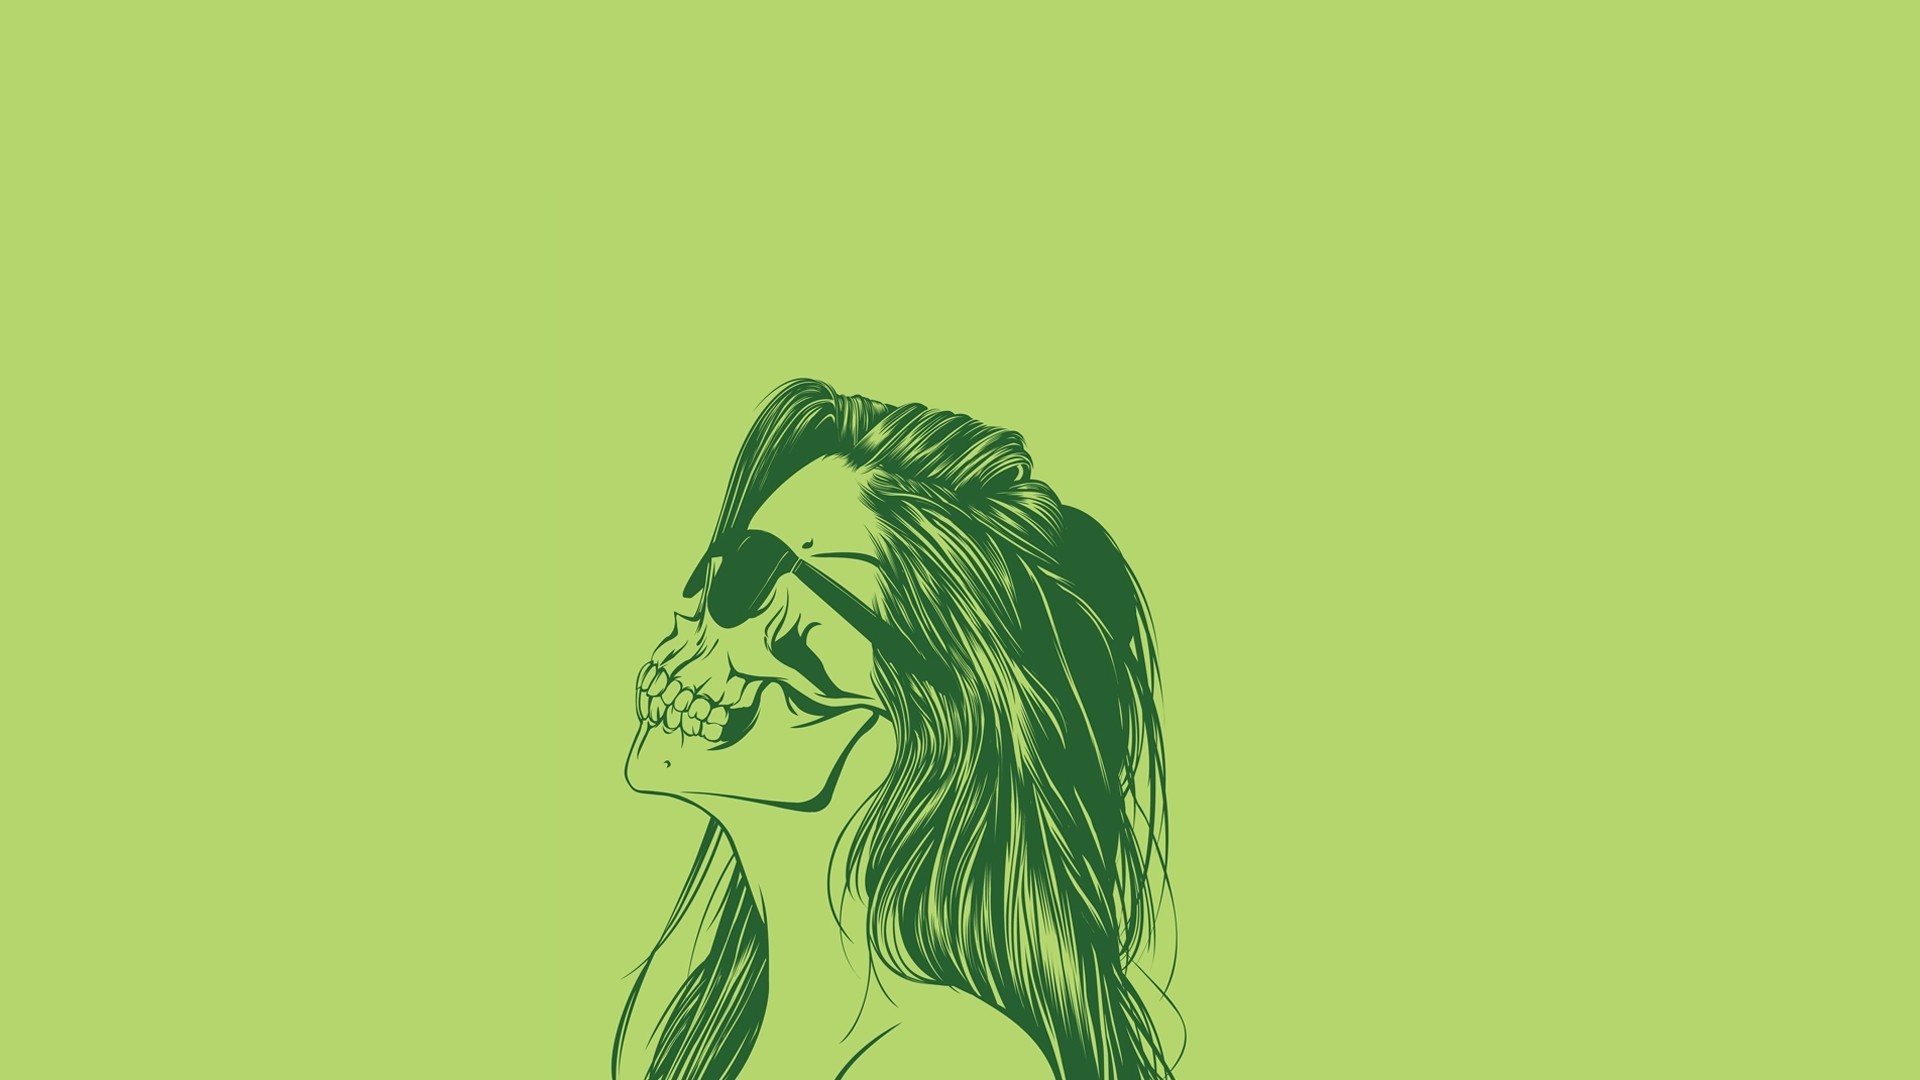 General 1920x1080 skull long hair minimalism artwork simple background women green women with shades sunglasses